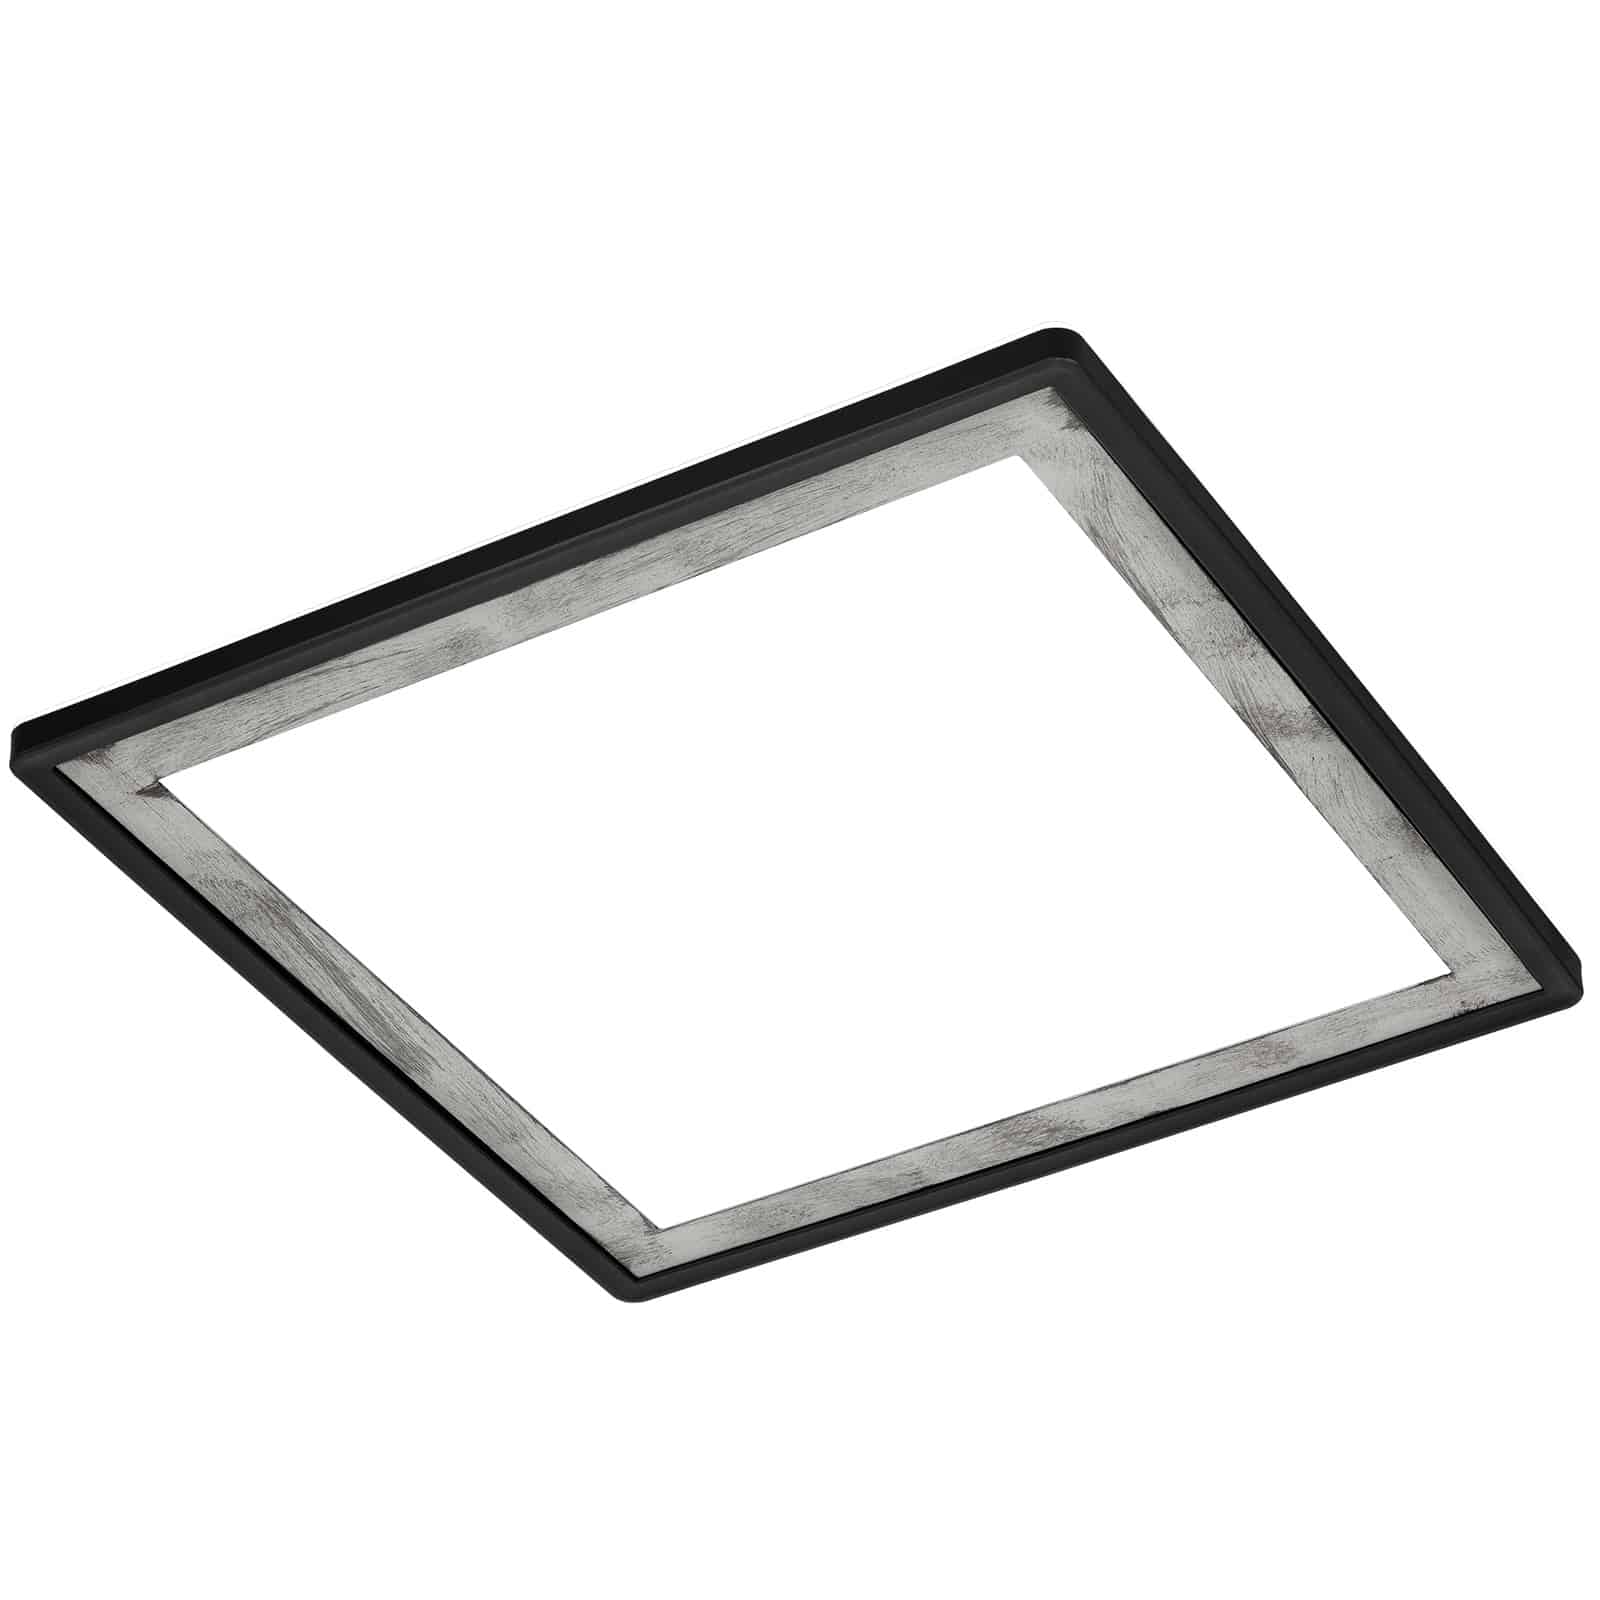 Ultraflaches LED-paneel met LED-achtergrondverlichting, 42 cm, LED, 18 W, 2400 lm, zwart-zilver